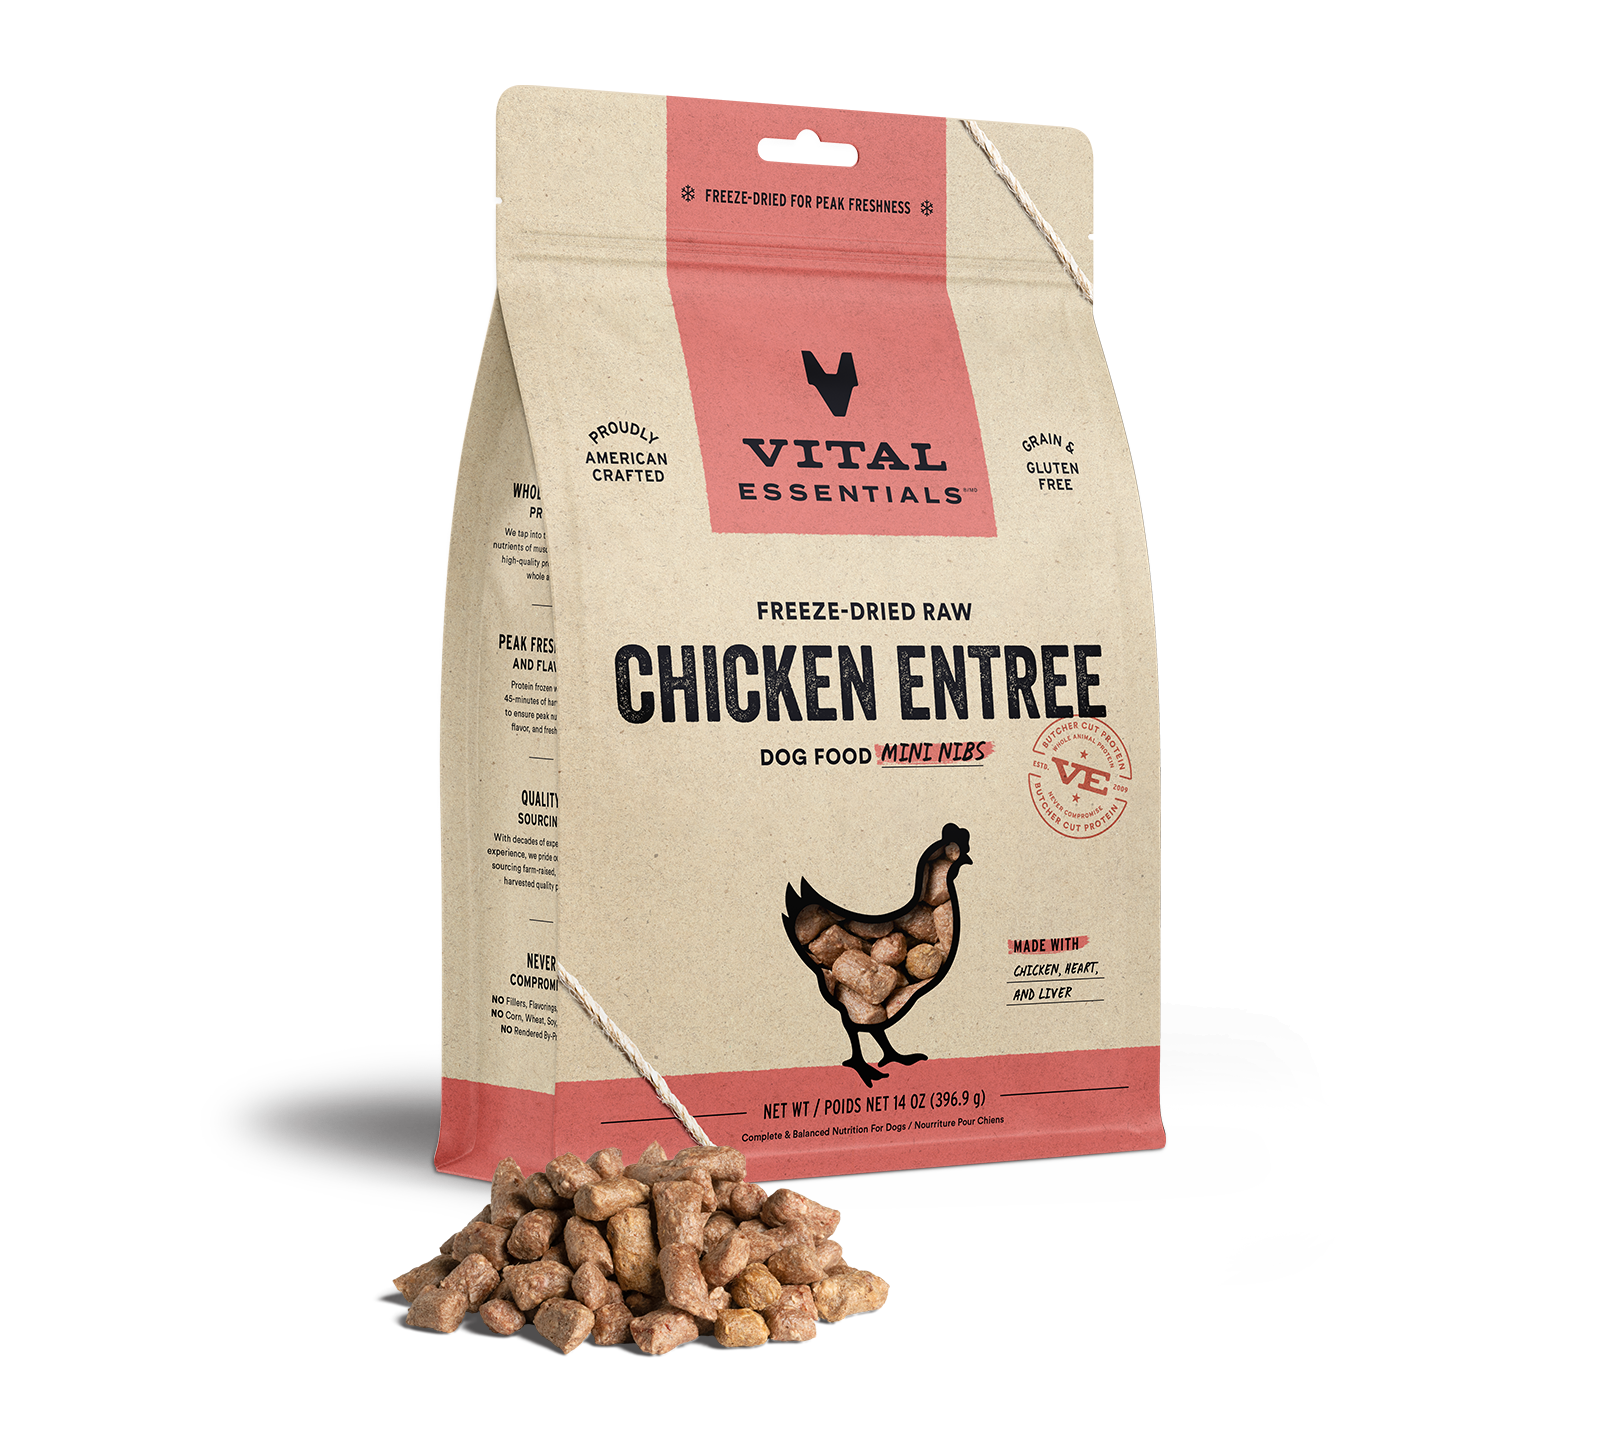 Vital Essentials Freeze-Dried Raw Chicken Entree Dog Food Mini Nibs, 14 oz - Healing/First Aid